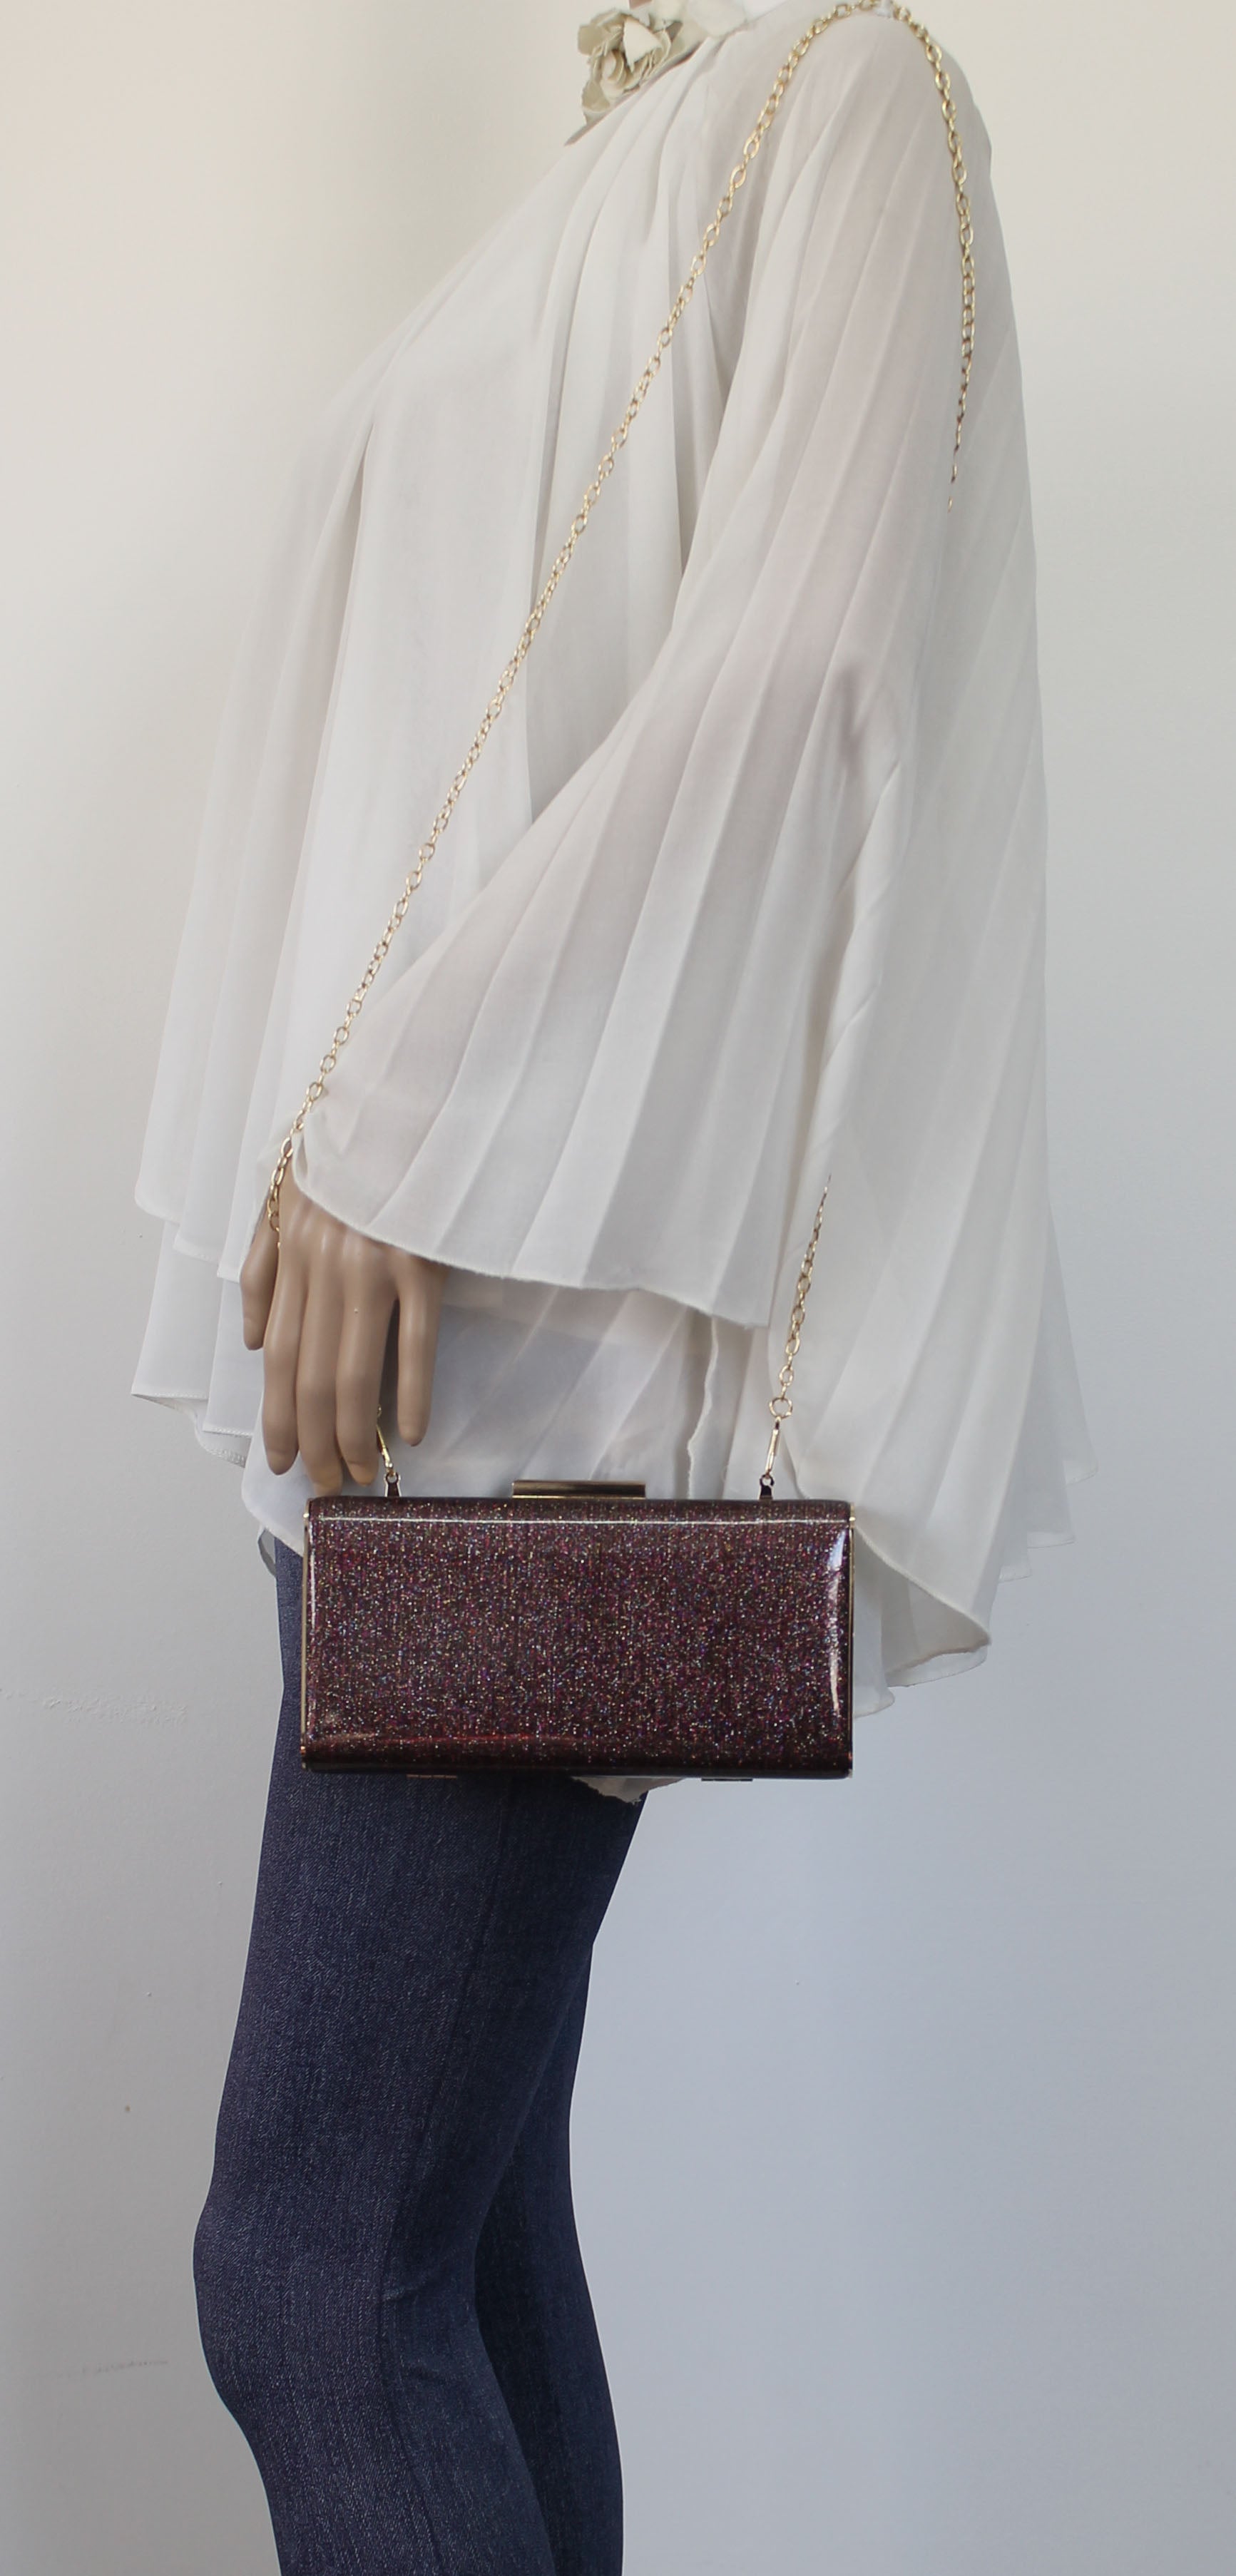 SWANKYSWANS Melissa Clutch Bag Multi Cute Cheap Clutch Bag For Weddings School and Work